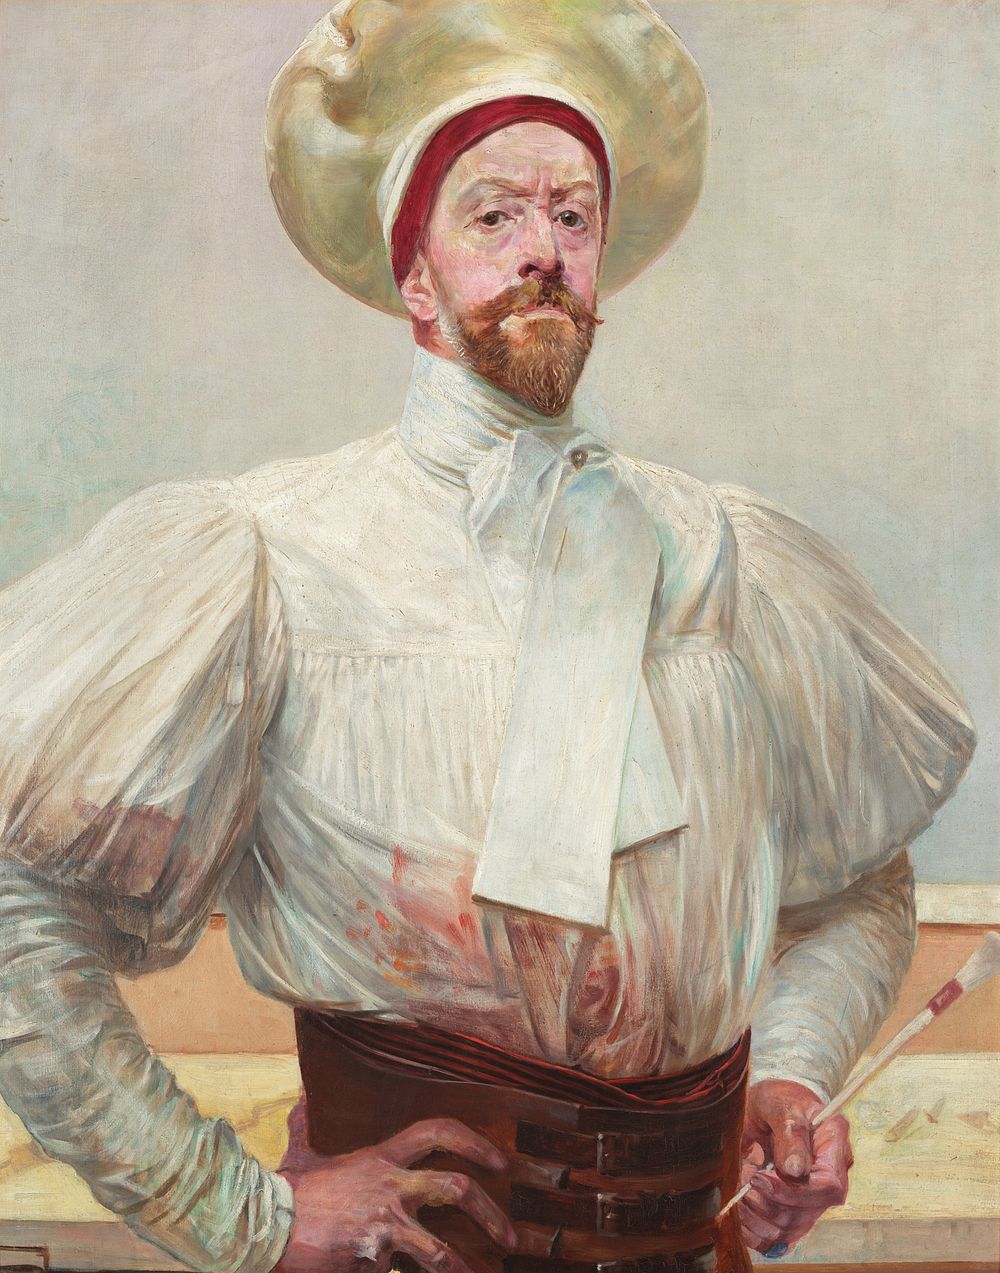 Self-portrait of artist Jacek Malczewski wearing a white traditional 19th century artist's smock (or smock-frock), a white…